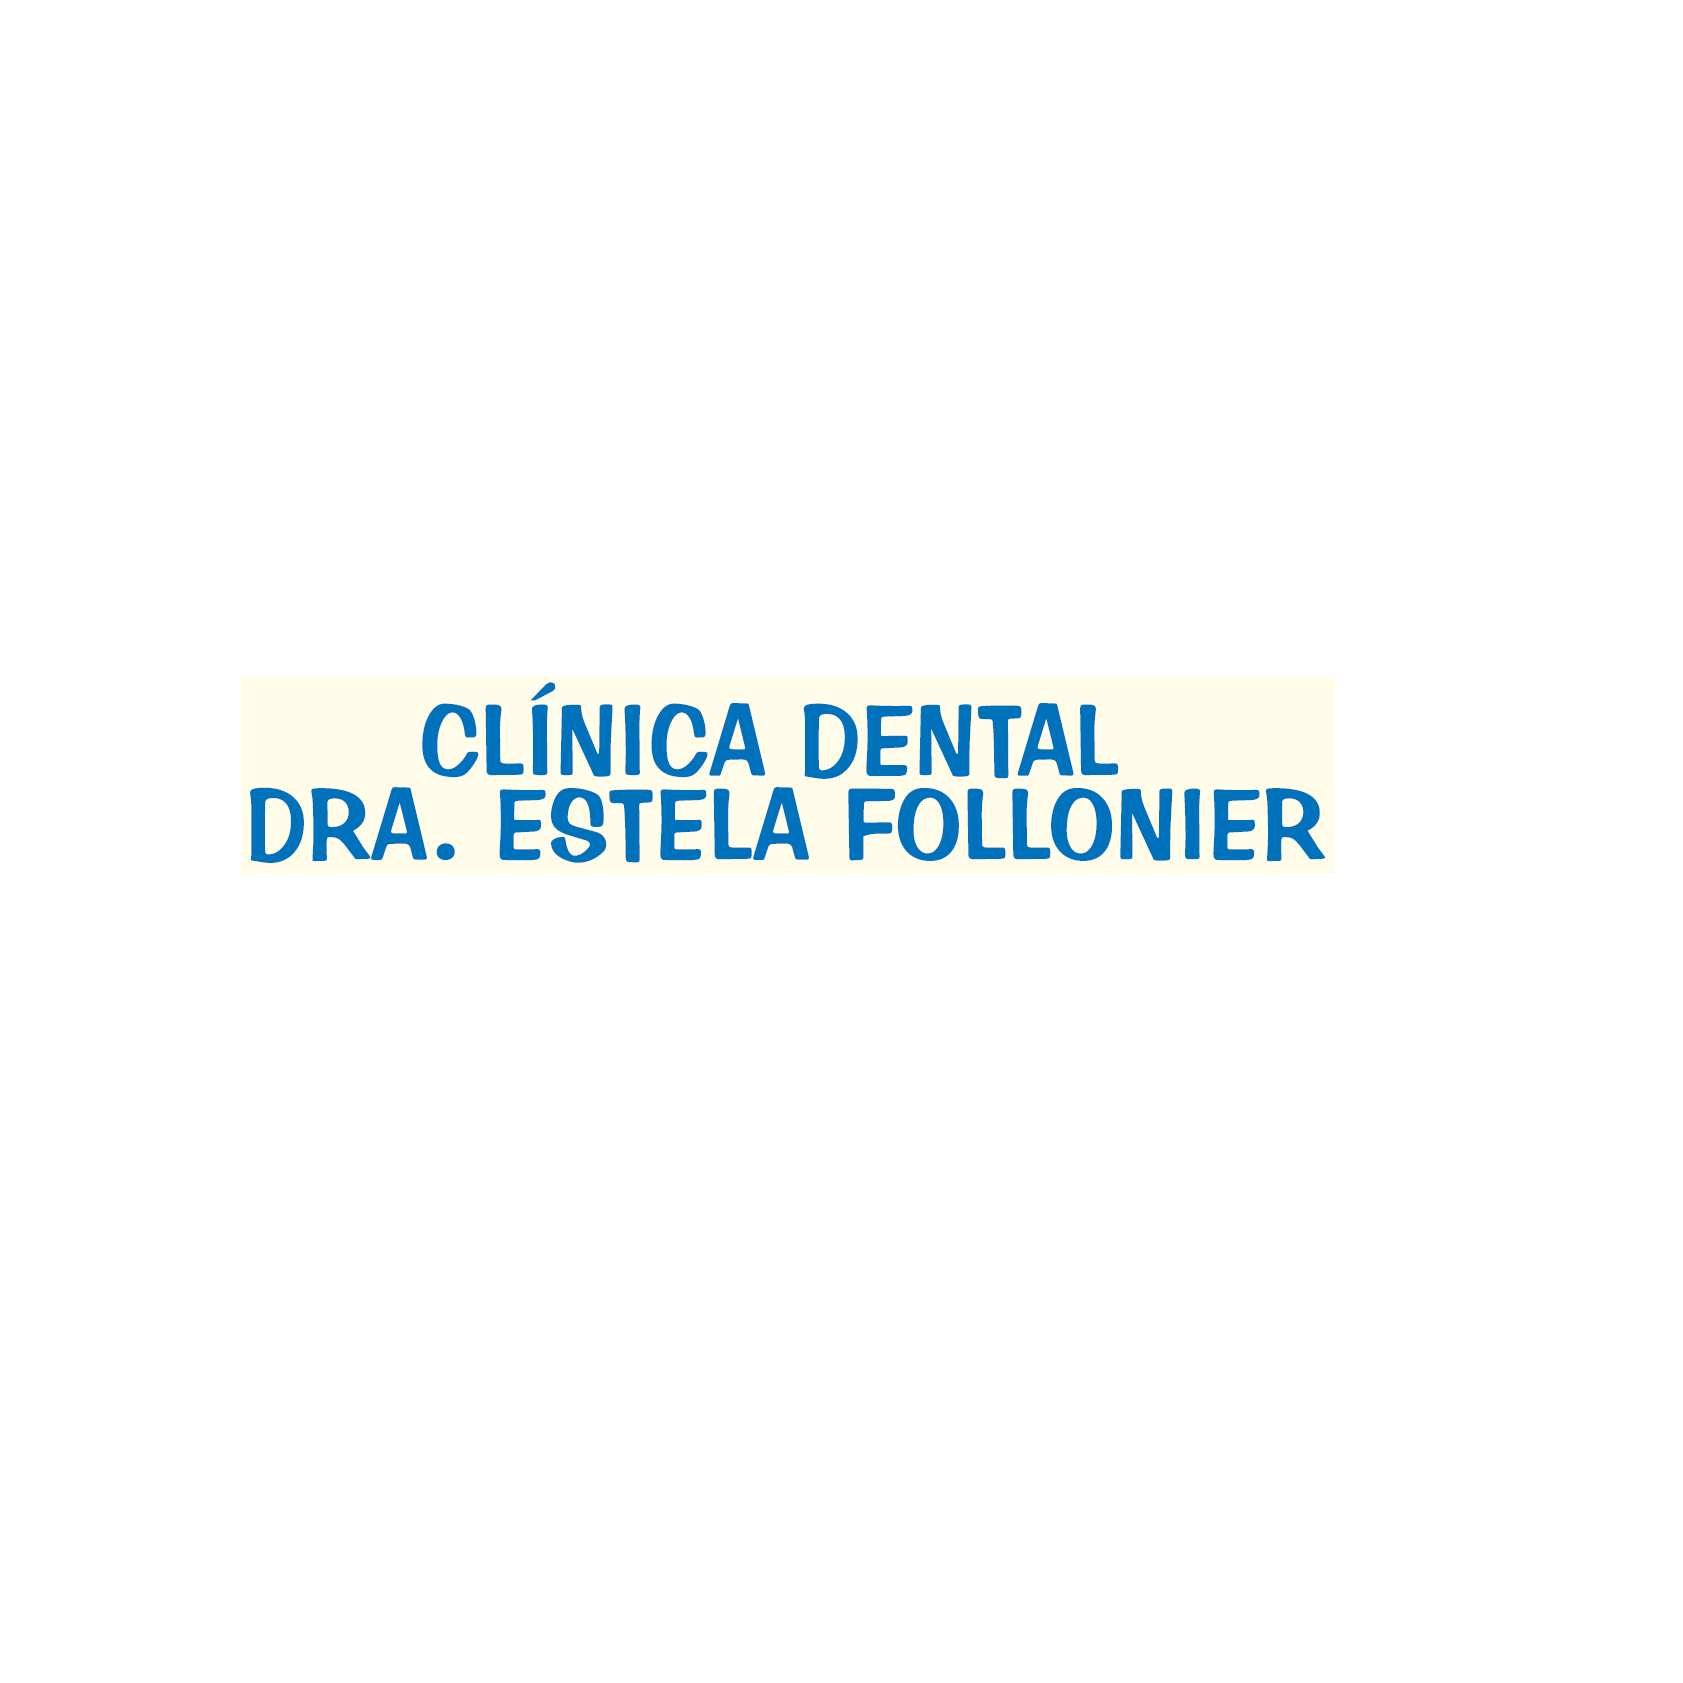 Clínica Dental Dra. Estela Follonier Torelló